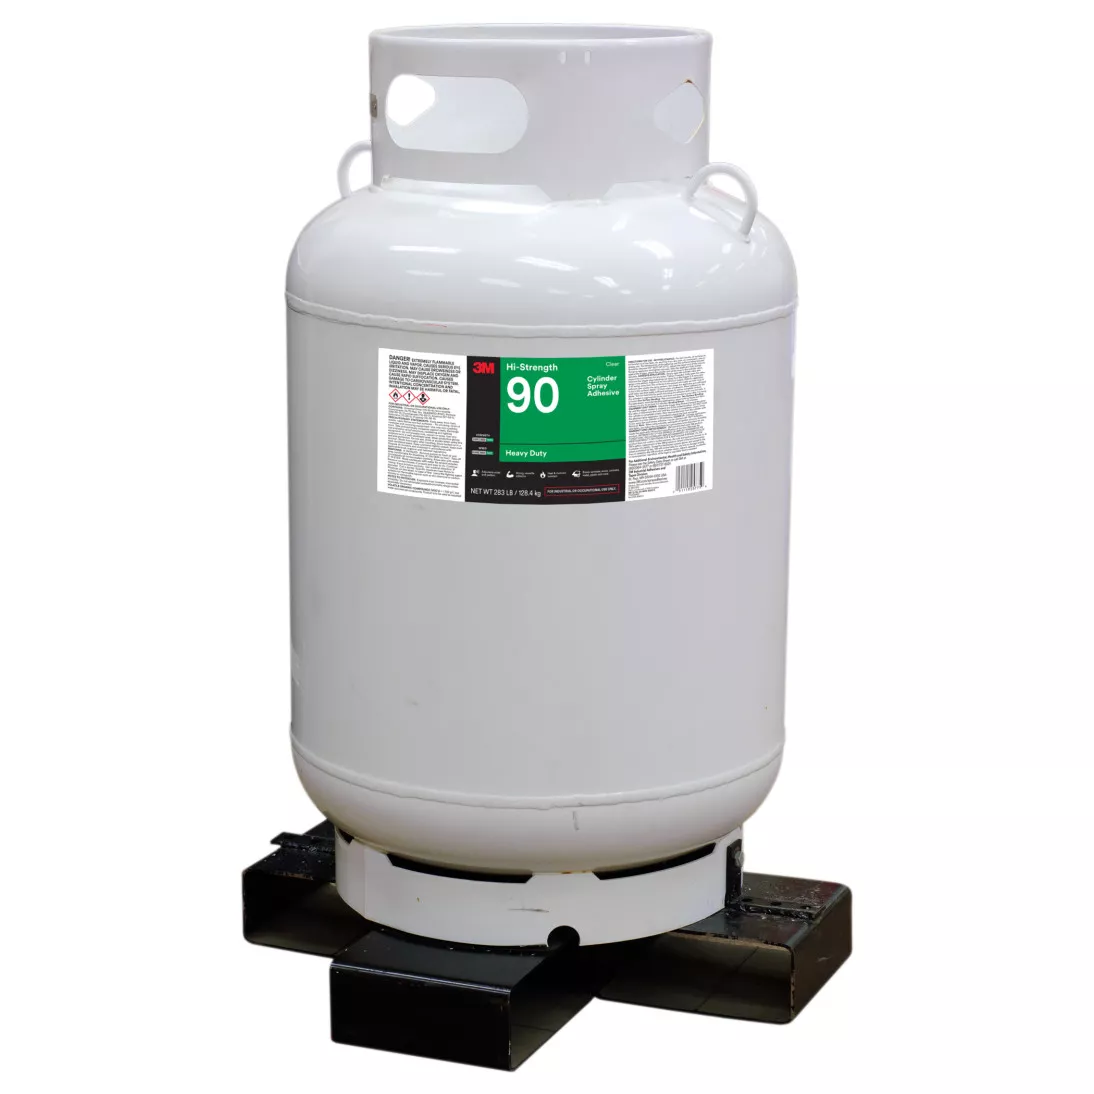 3M™ Hi-Strength 90 Cylinder Spray Adhesive, Clear, Jumbo Cylinder (Net
Wt 283.2 lb)